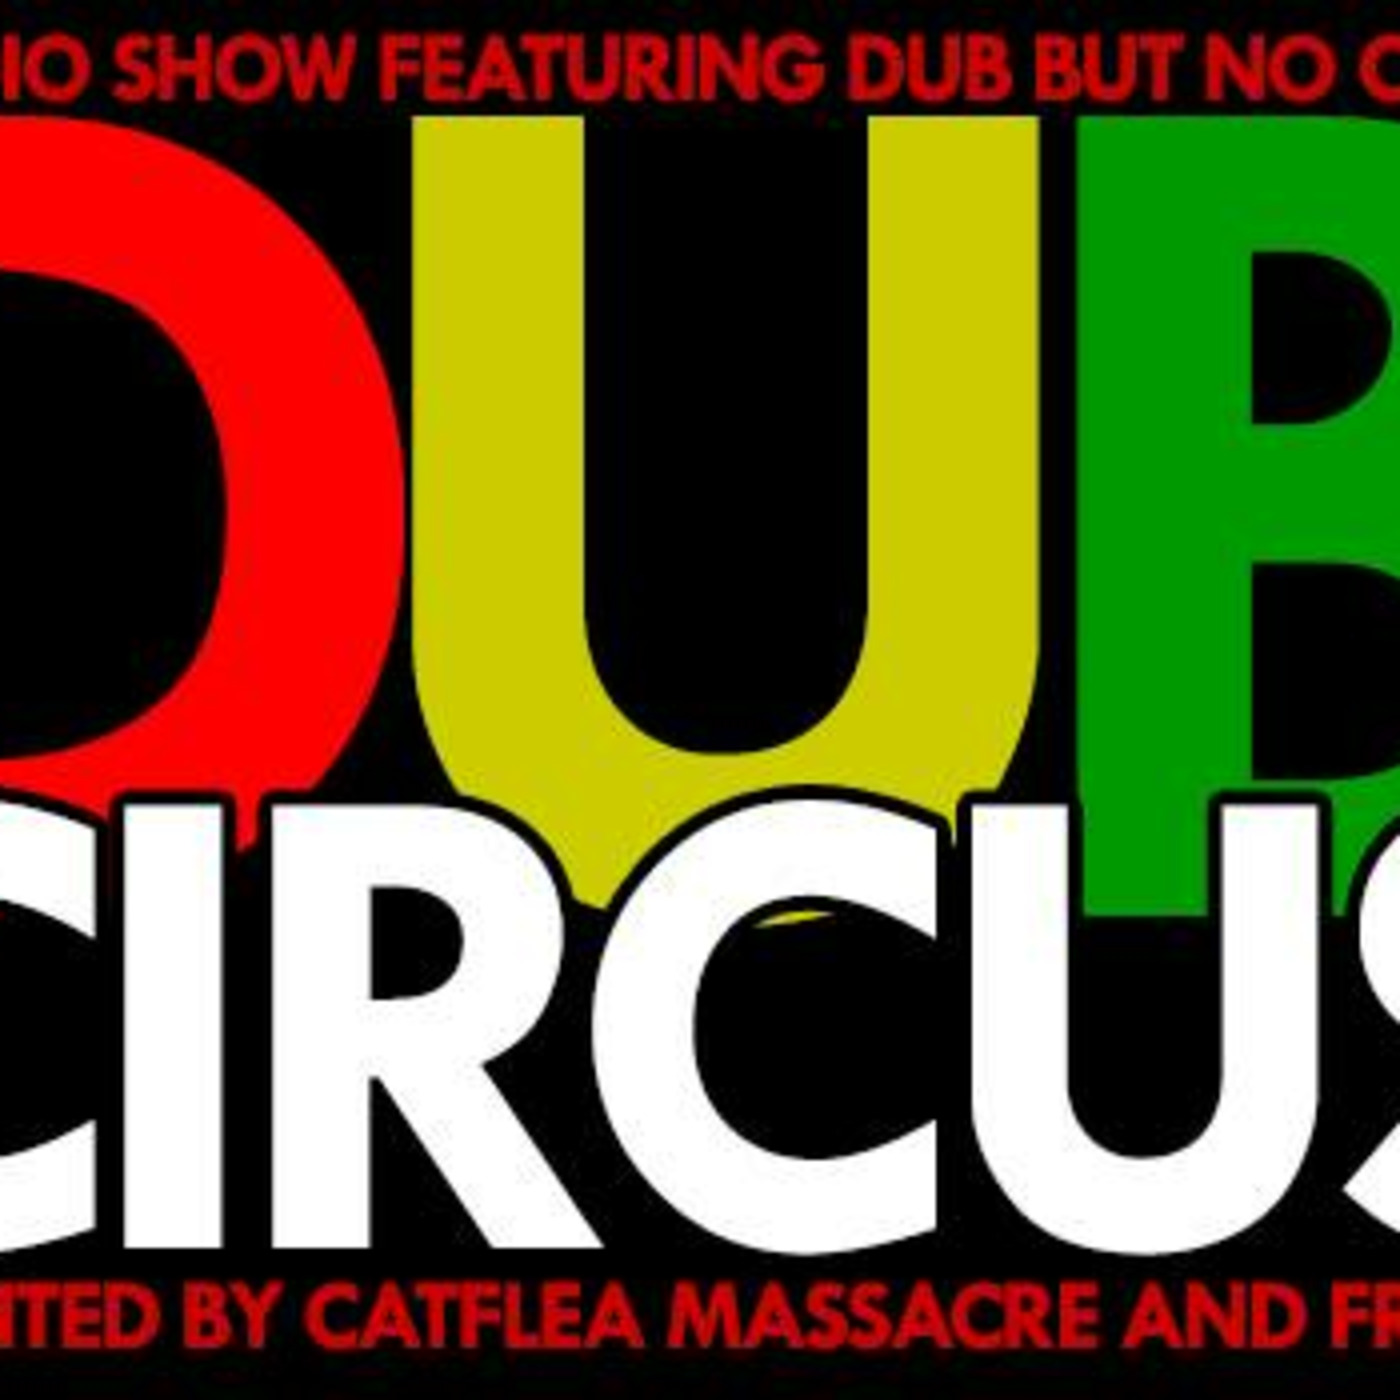 Episode 3279: Dub Circus Show 235 On bootboyradio.net